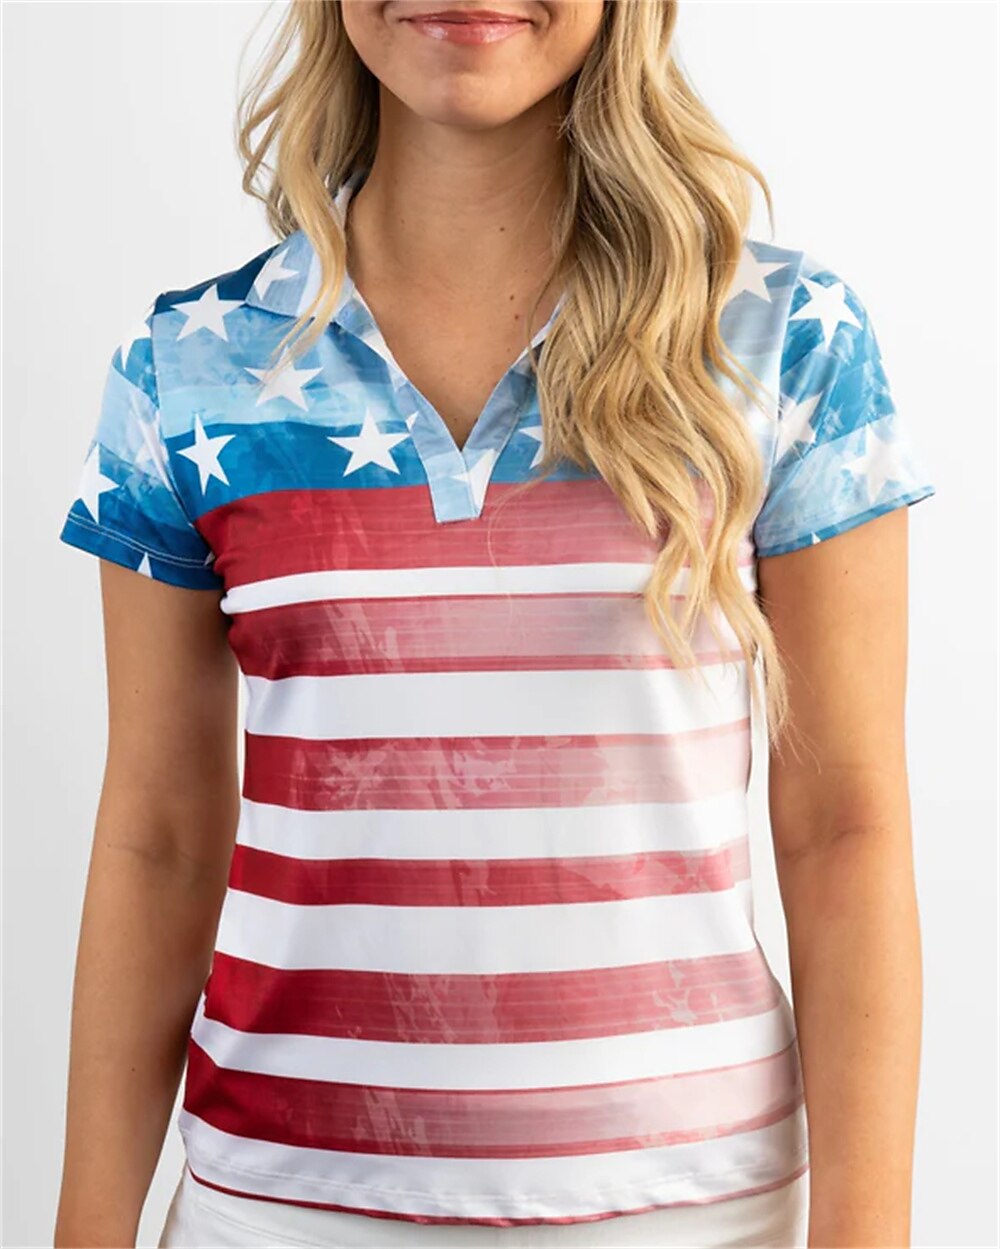 Men's Women's Matching polo Polo Shirt golf apparel Breathable Quick Dry Lightweight Short Sleeve Top Stripes Summer Golf